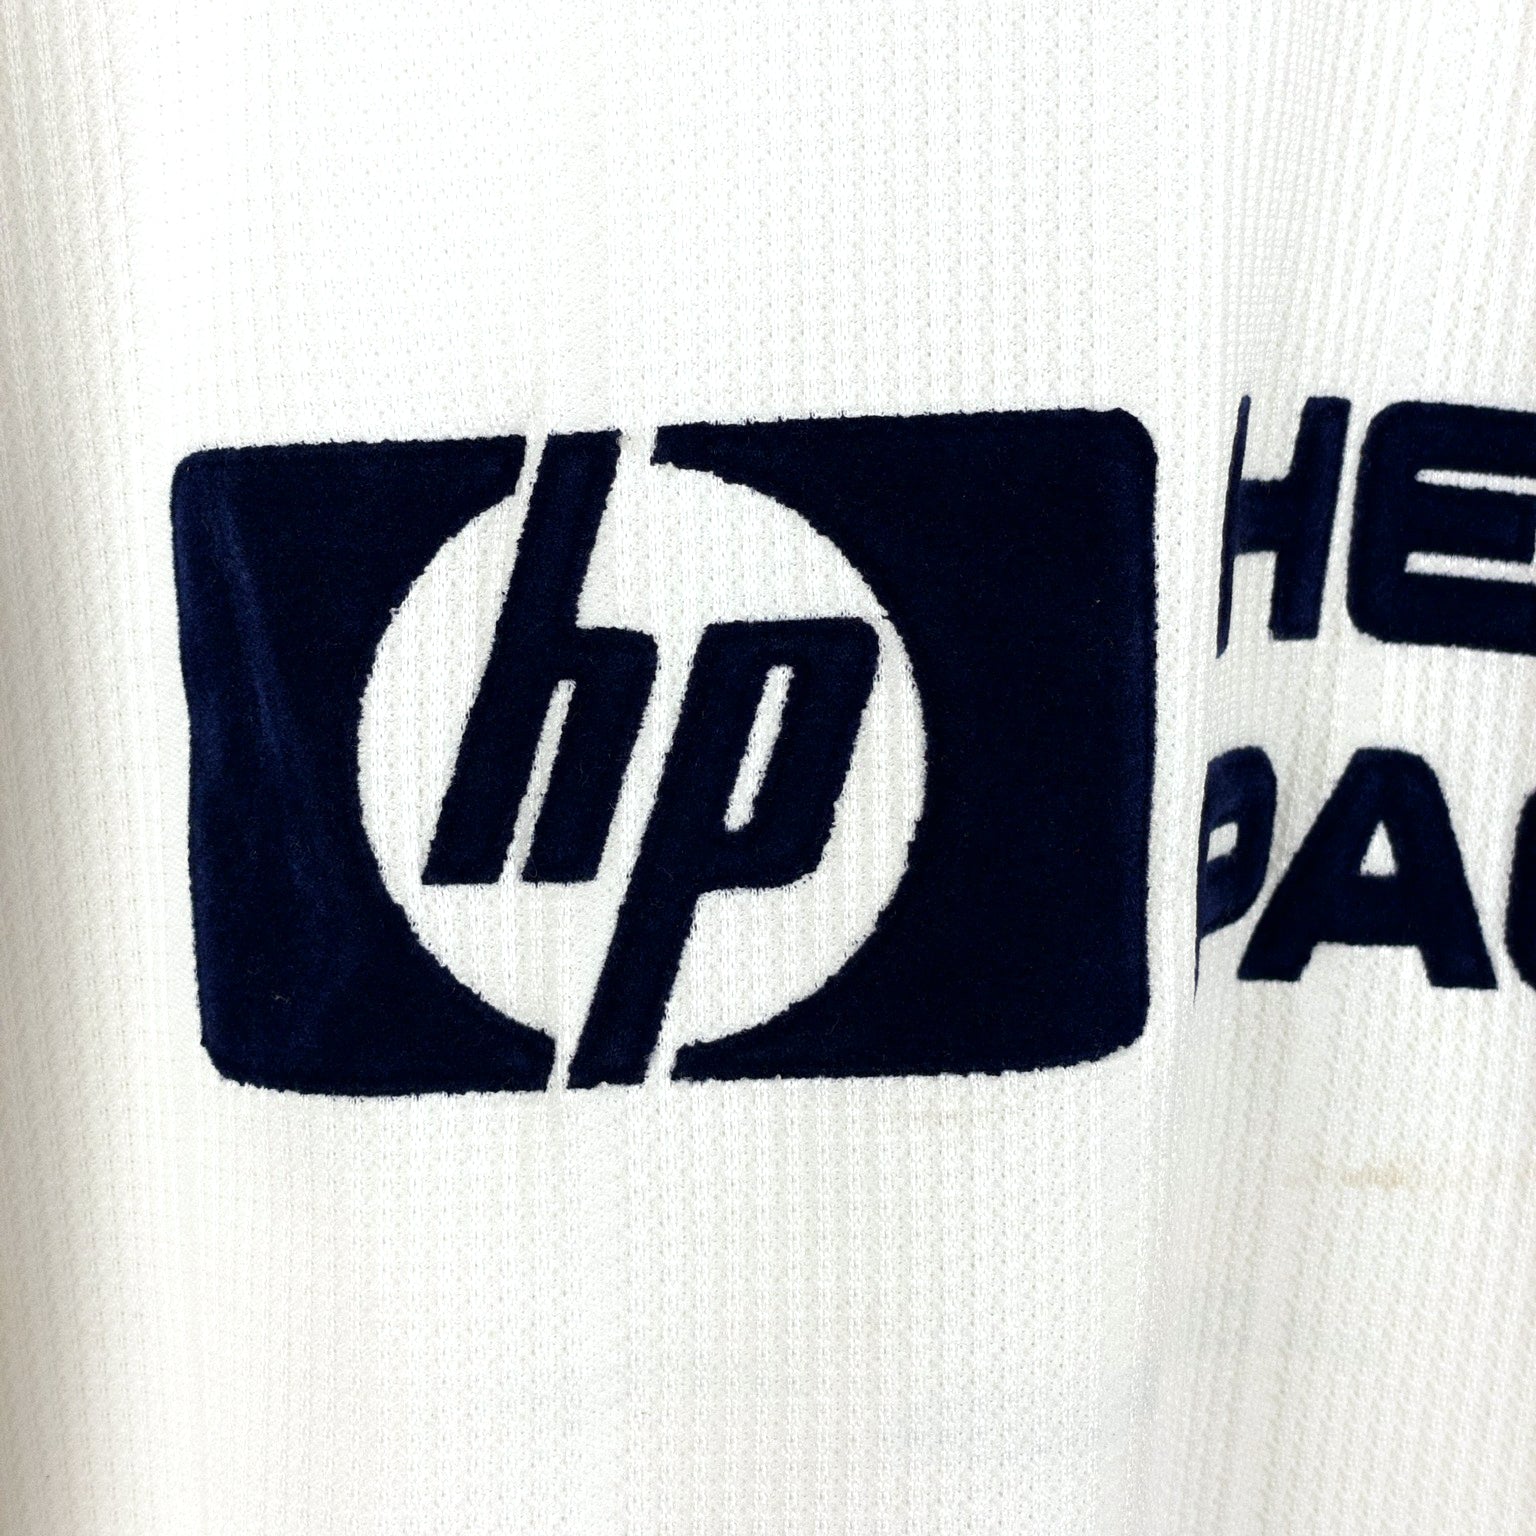 Tottenham Hotspur 2015-2016 Home Long Sleeve Shirt - Online Shop From  Footuni Japan